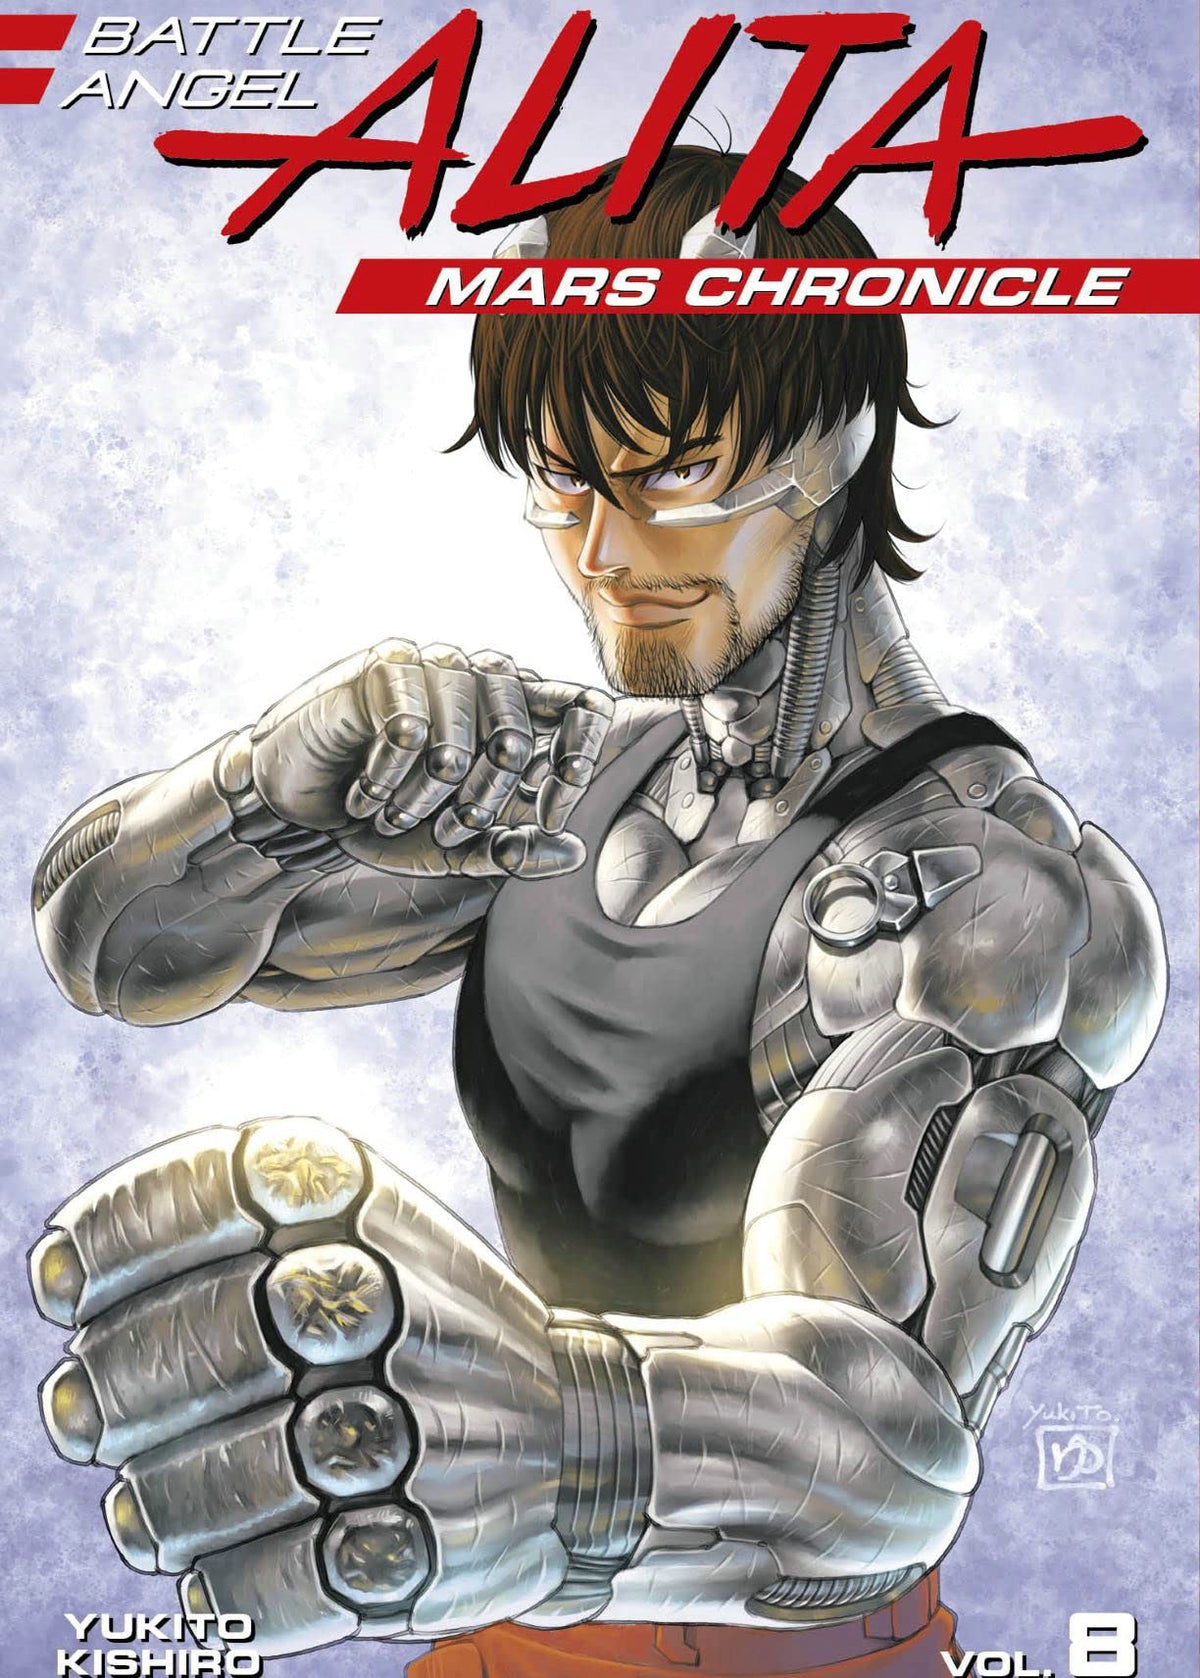 Battle Angel Alita: Mars Chronicle Vol. 8 - Third Eye